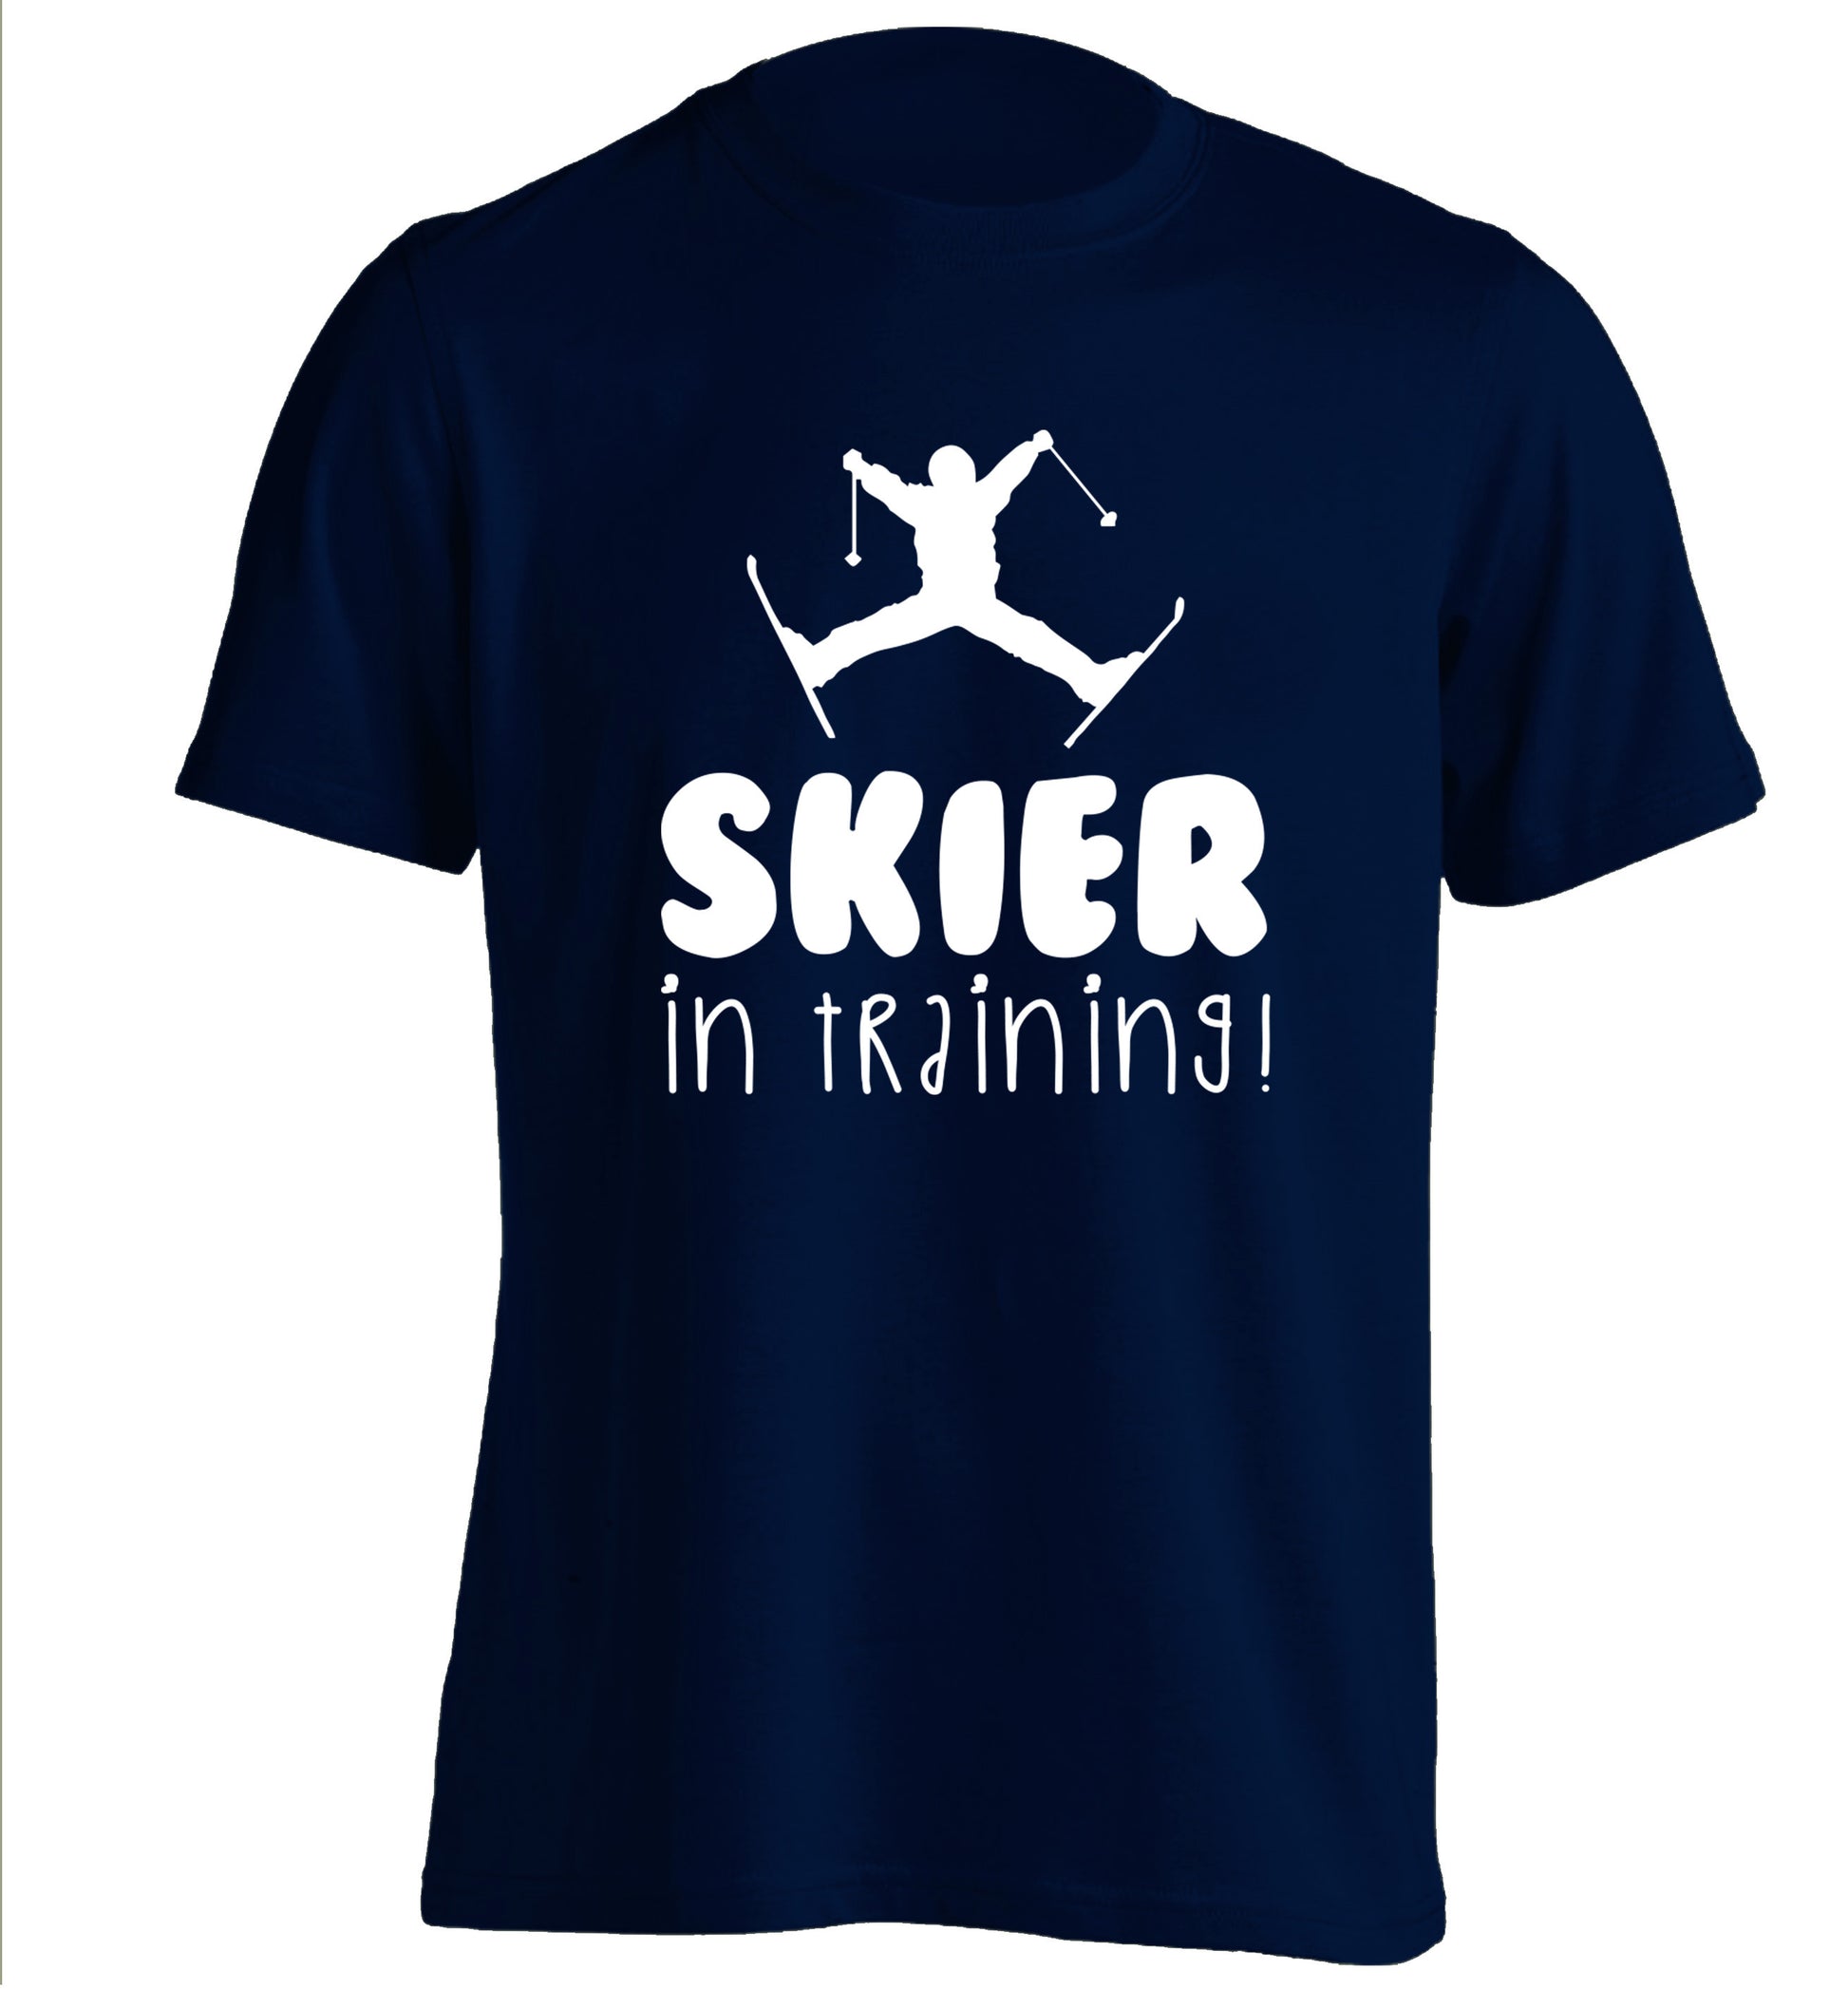 Skier in training adults unisex navy Tshirt 2XL